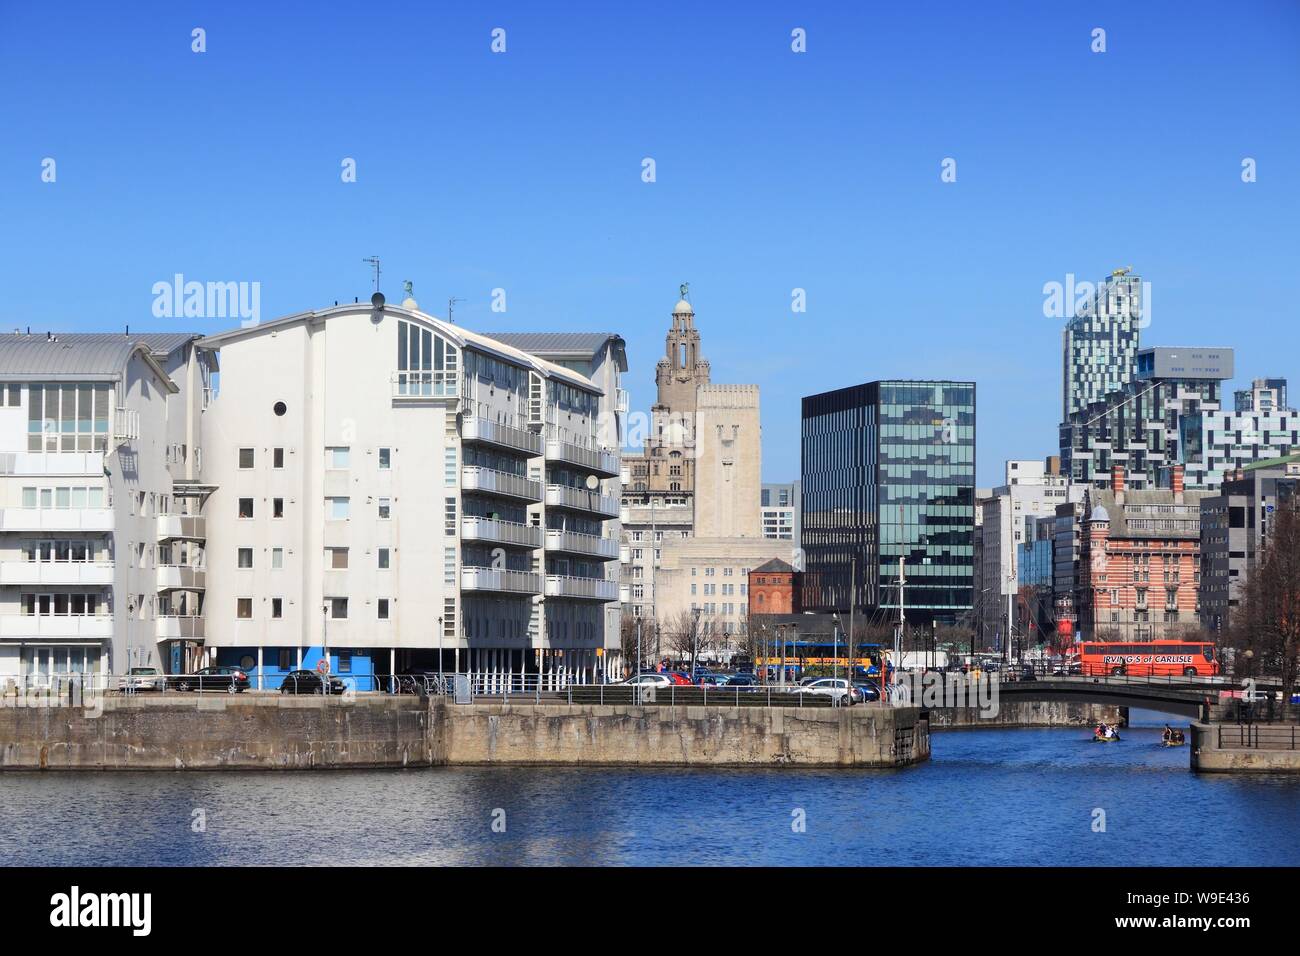 LIVERPOOL, Großbritannien - 20 April, 2013: Moderne und alte Stadt Mischungen in den Docks in Liverpool, Großbritannien. Berühmte Docks sind Teil von Liverpool UNESCO's World Heritage S Stockfoto